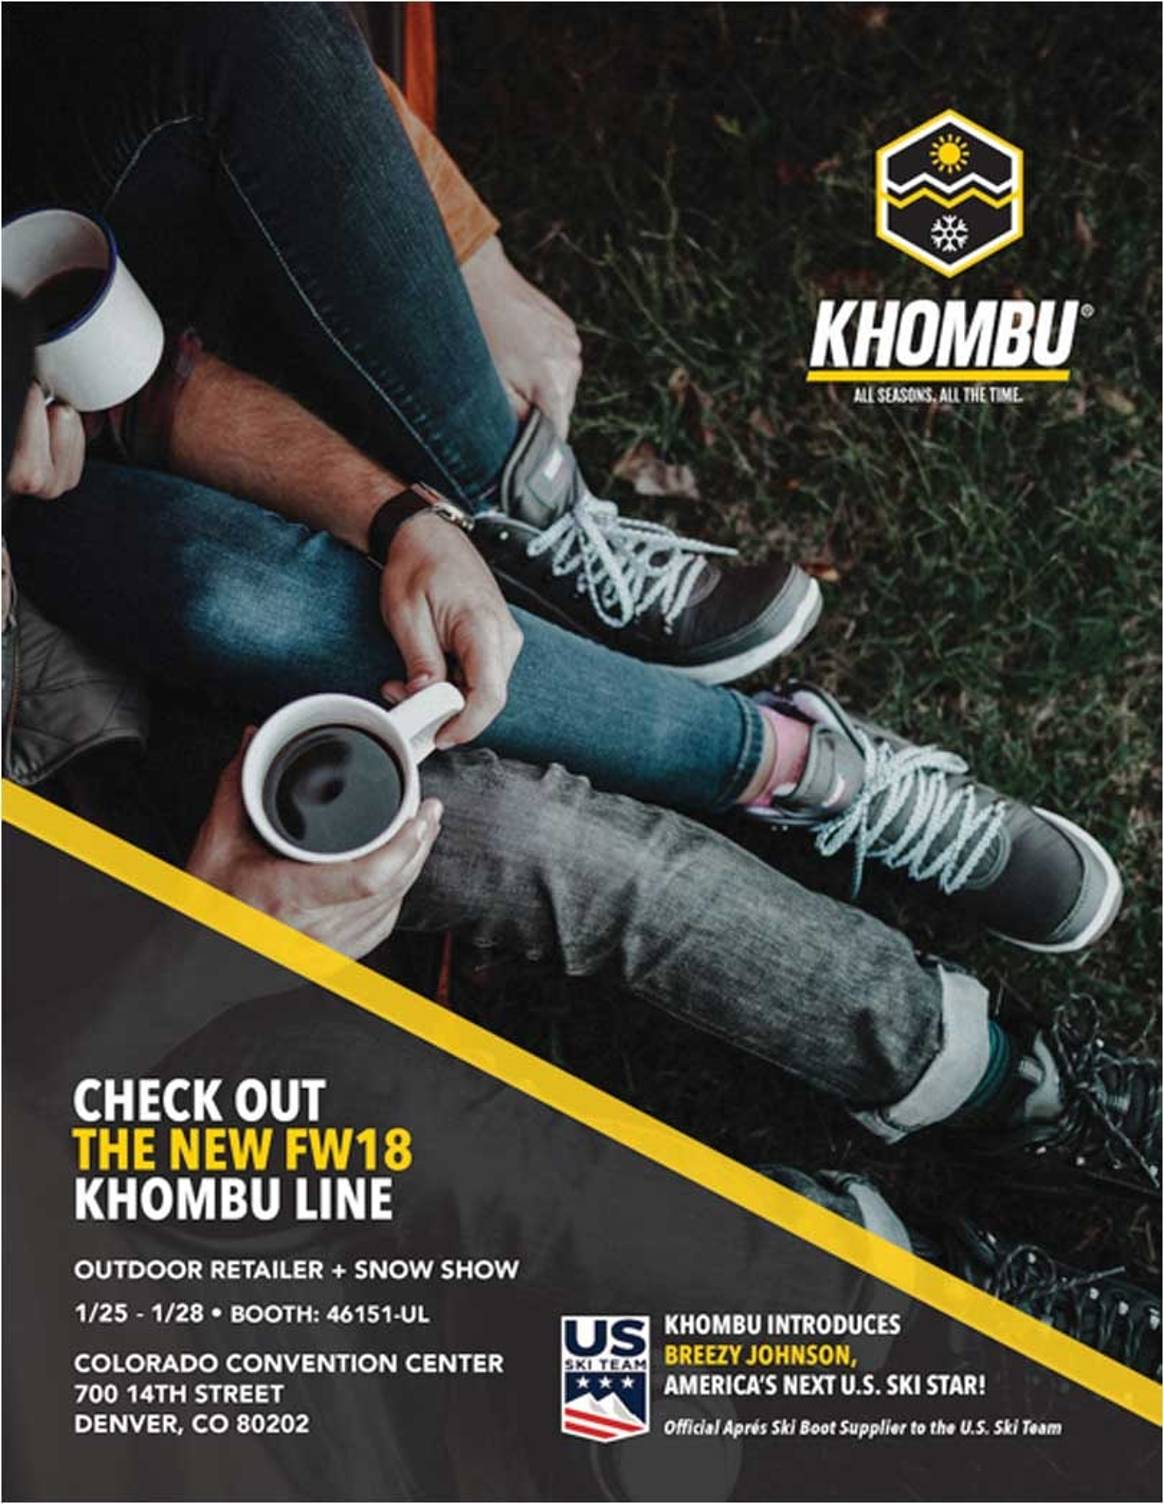 Khombu shares insight on all-season technology for outerwear